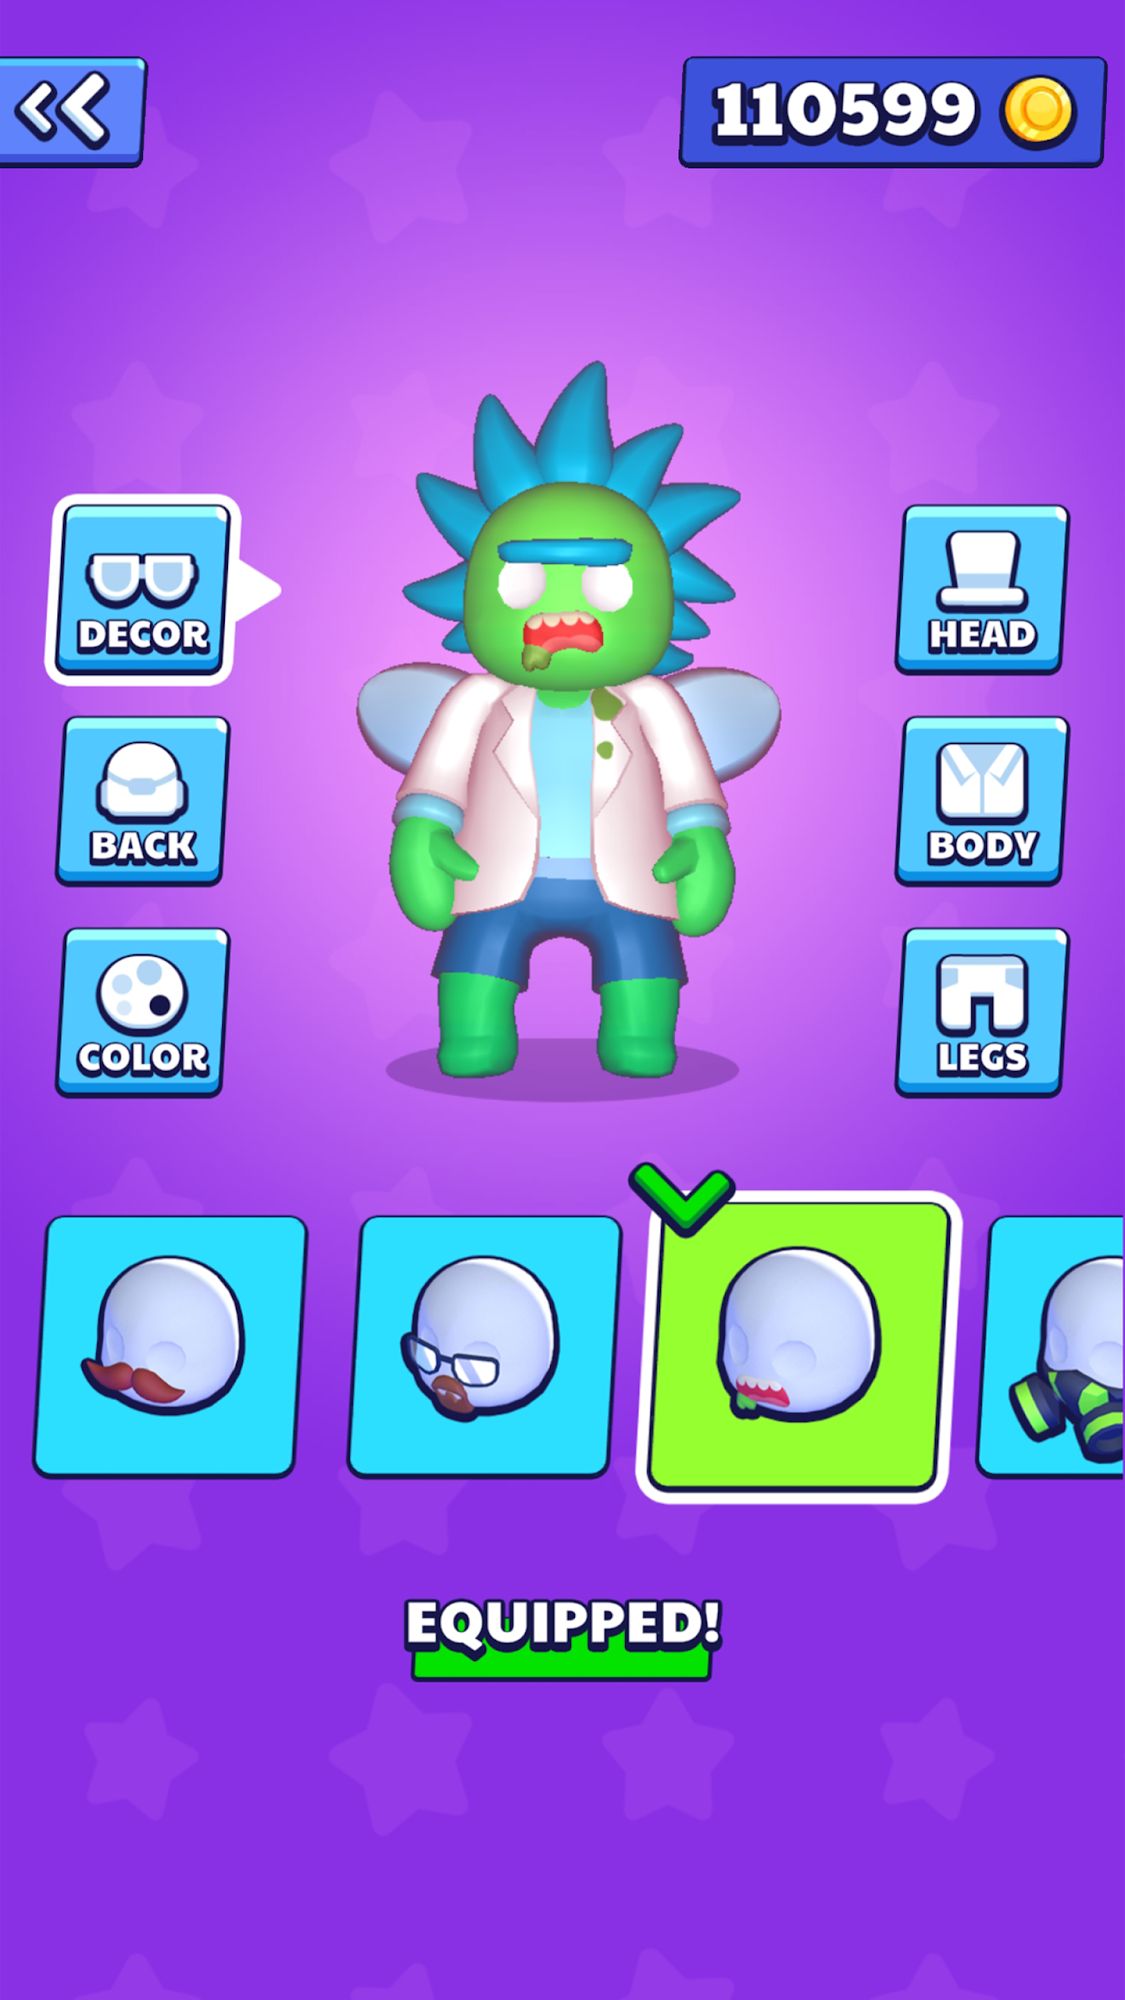 Party Gang - Android game screenshots.